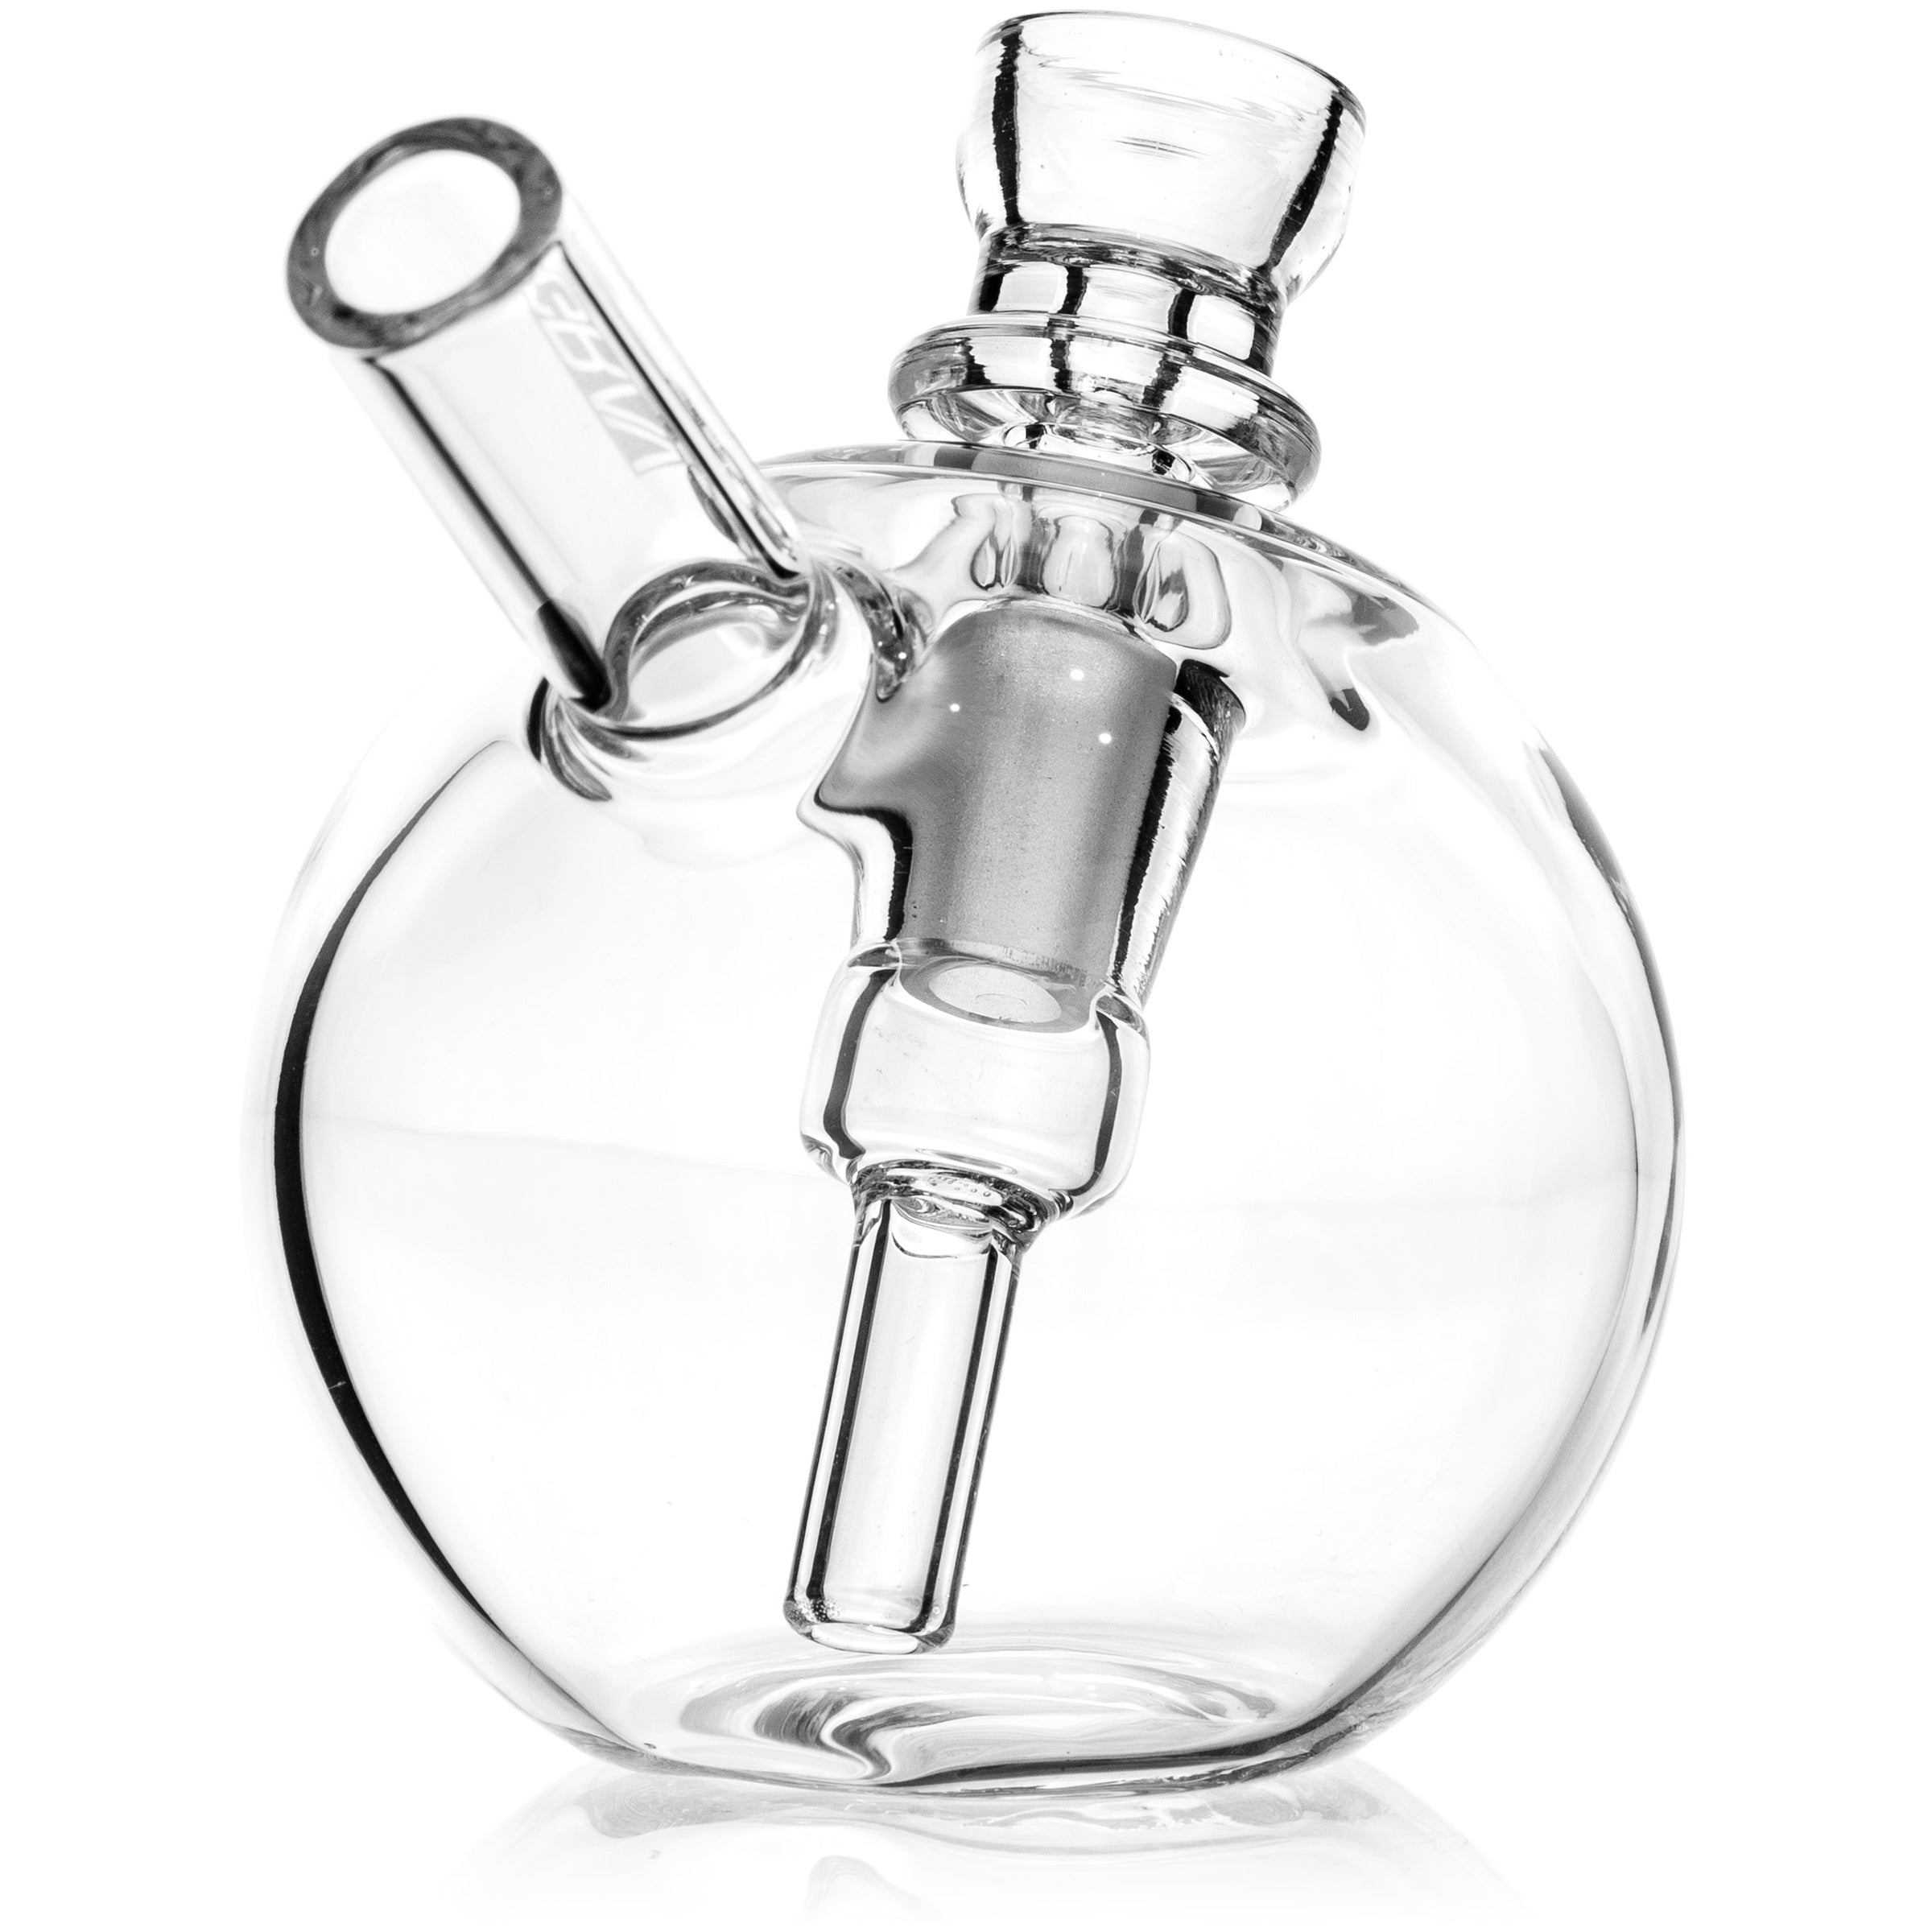 Spherical Pocket Bubbler, by Grav Labs